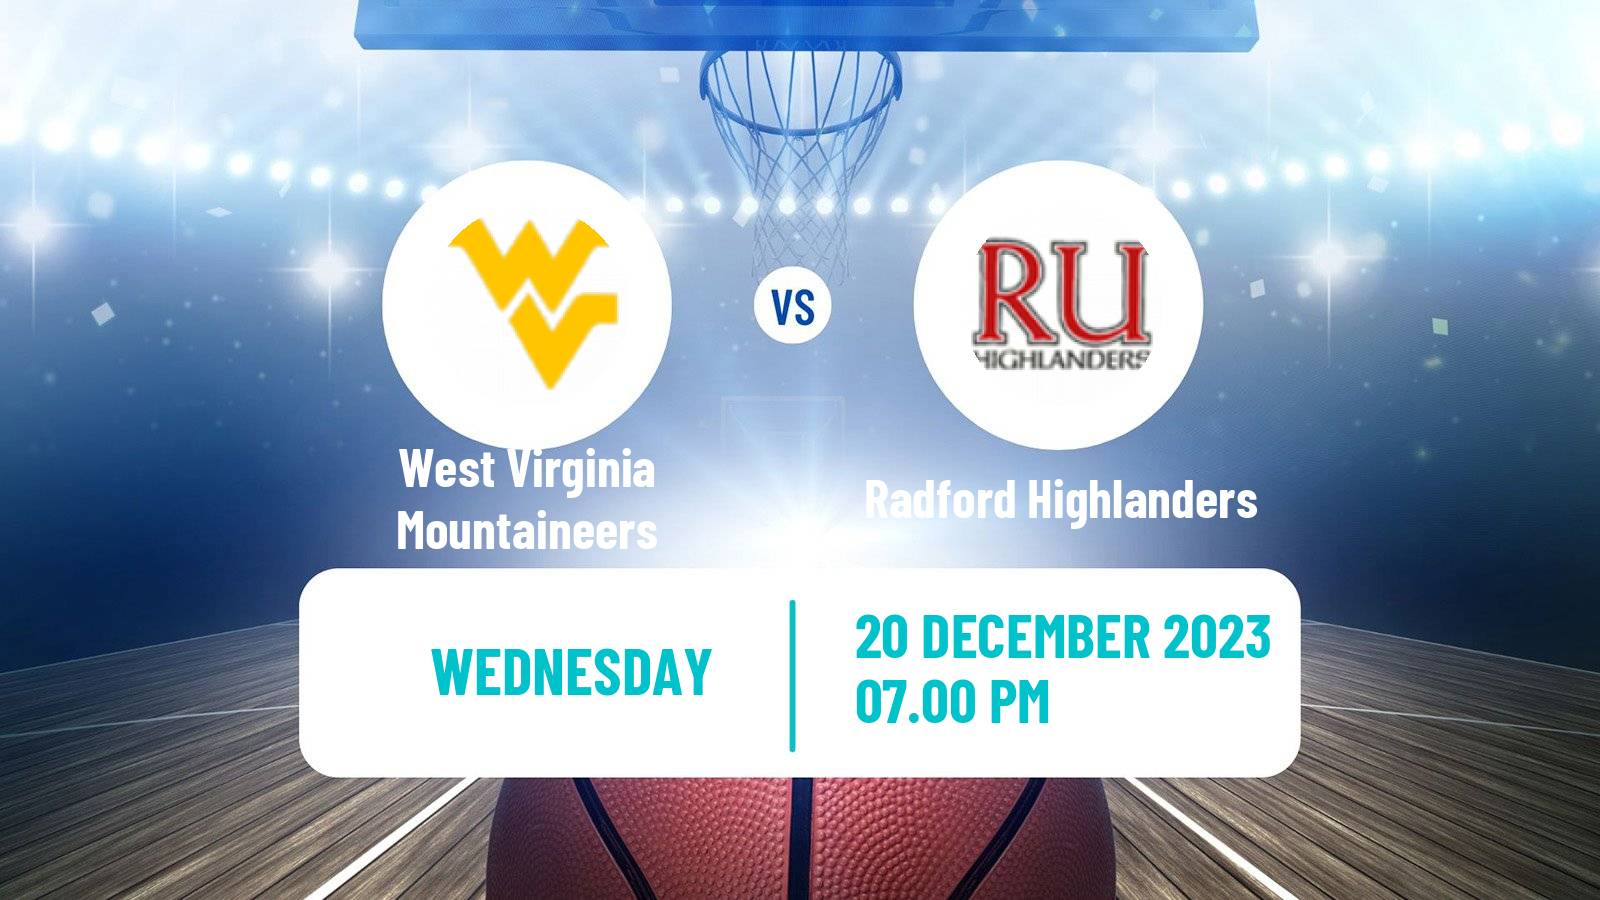 Basketball NCAA College Basketball West Virginia Mountaineers - Radford Highlanders